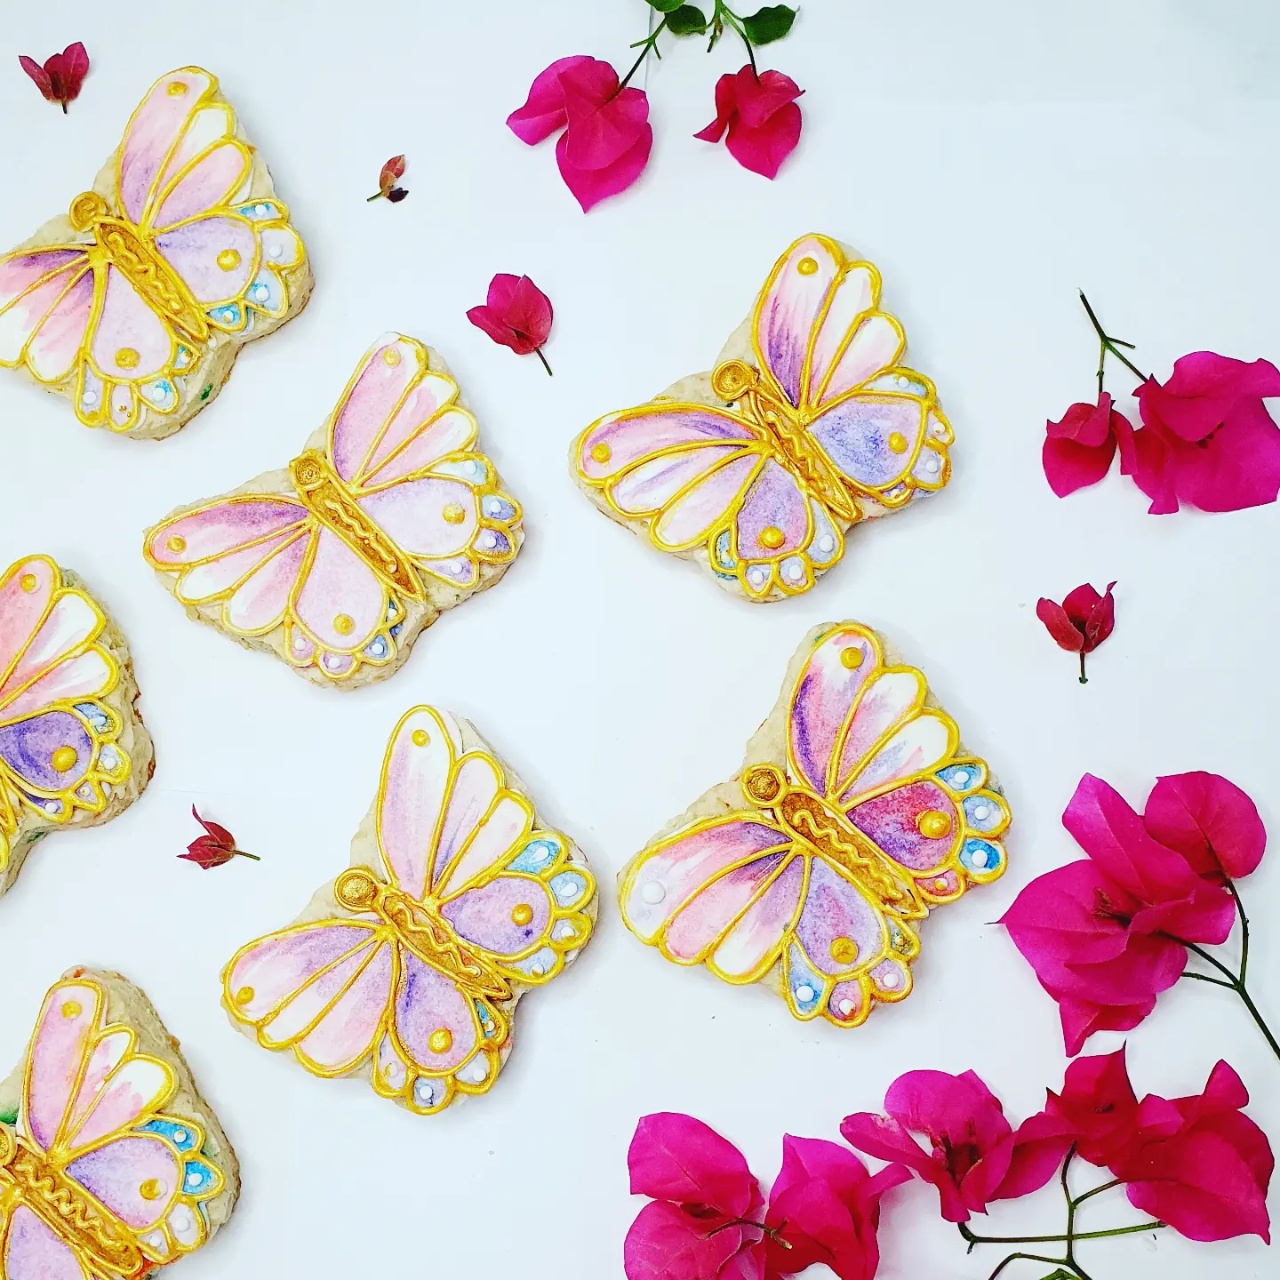 Enchanted Cookies & Treats